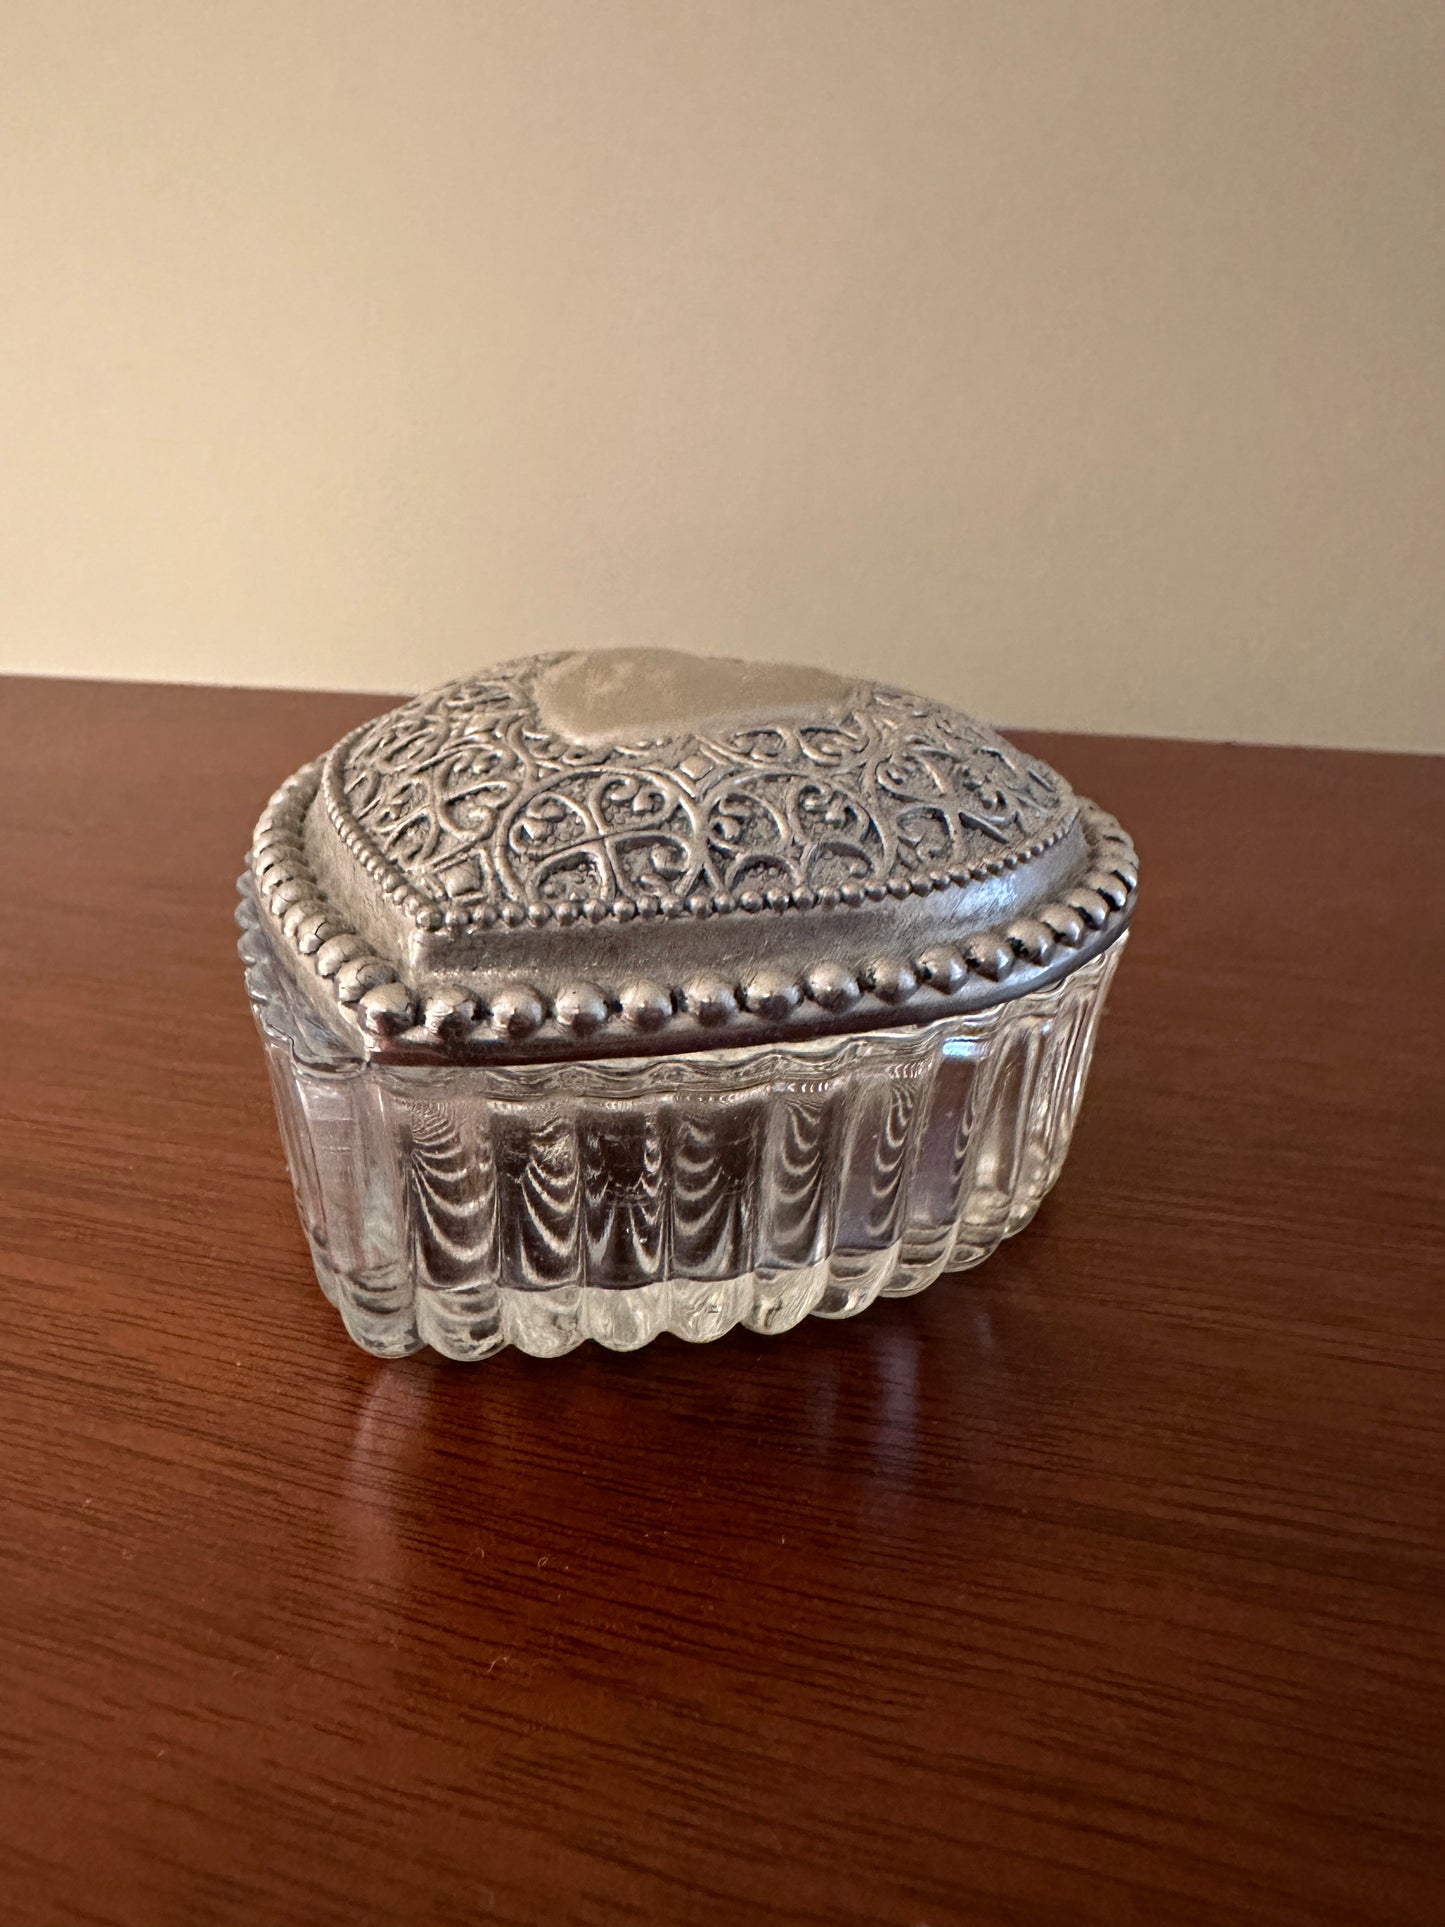 Silver Plated Heart Shaped Trinket Box